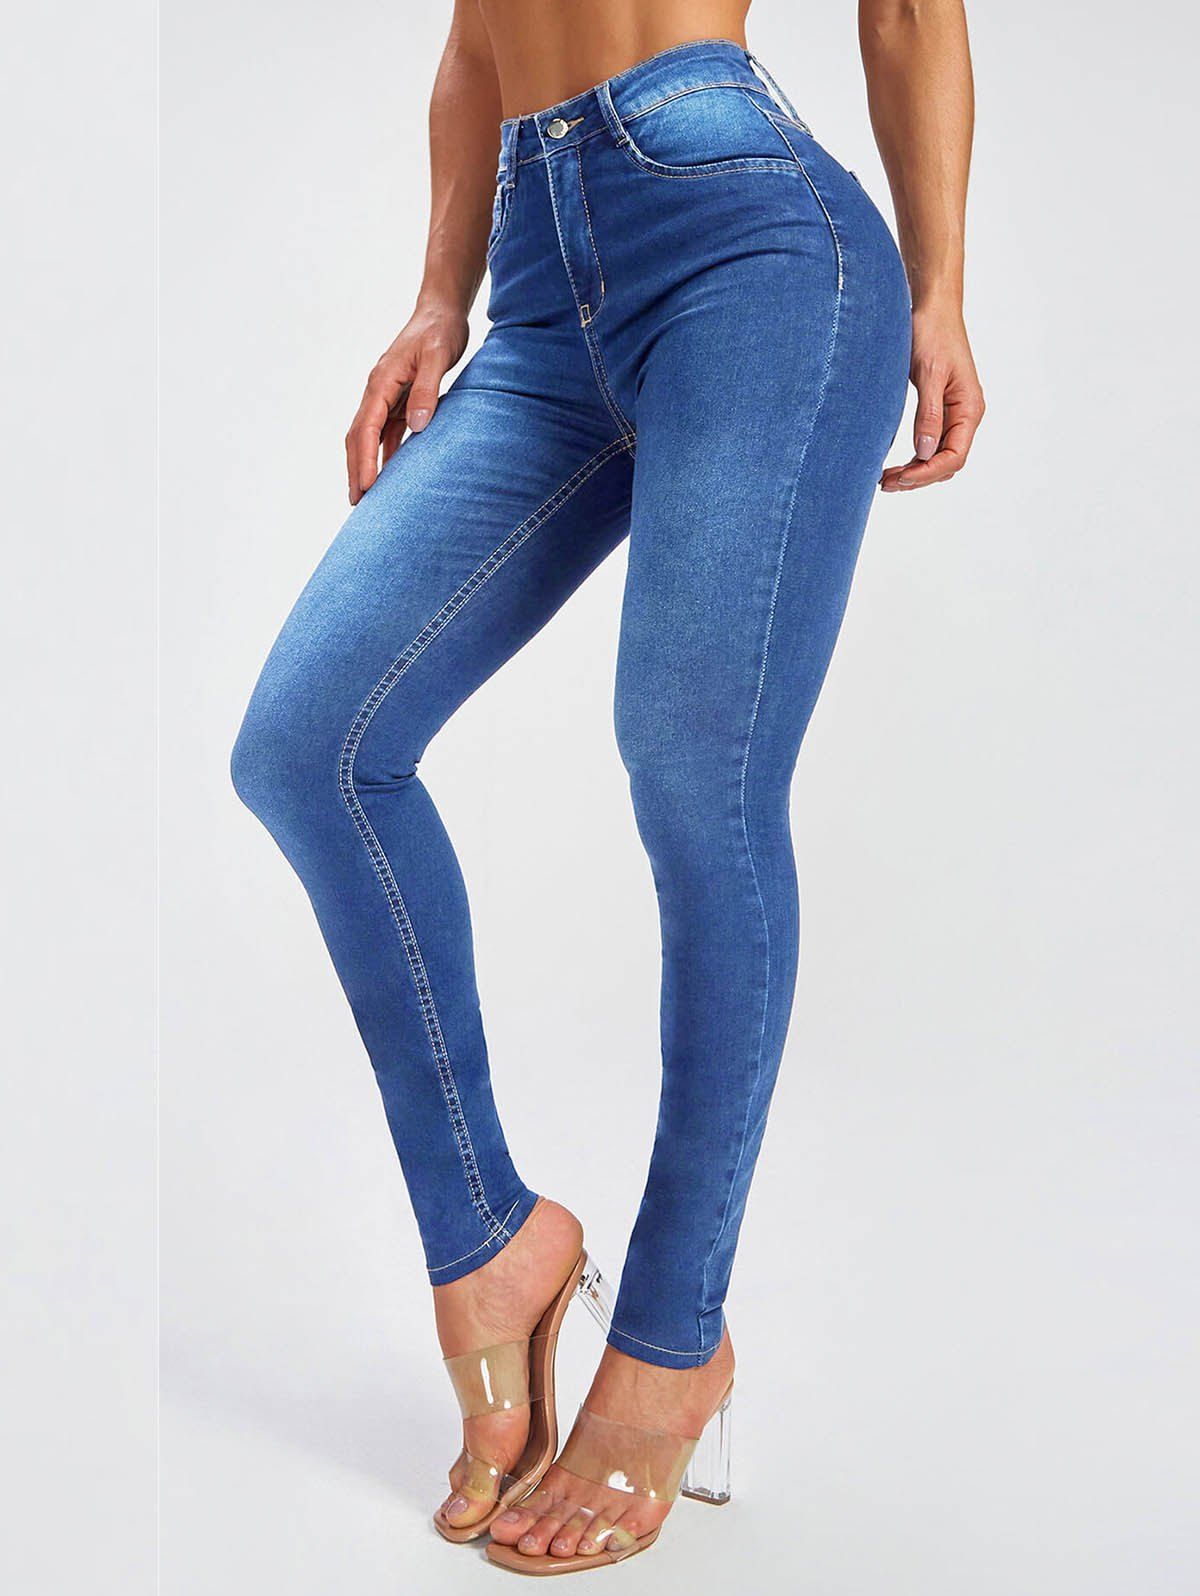 Skinny Jeans High Waisted Zipper Fly Pockets Long Denim Pants - BLUE XXL